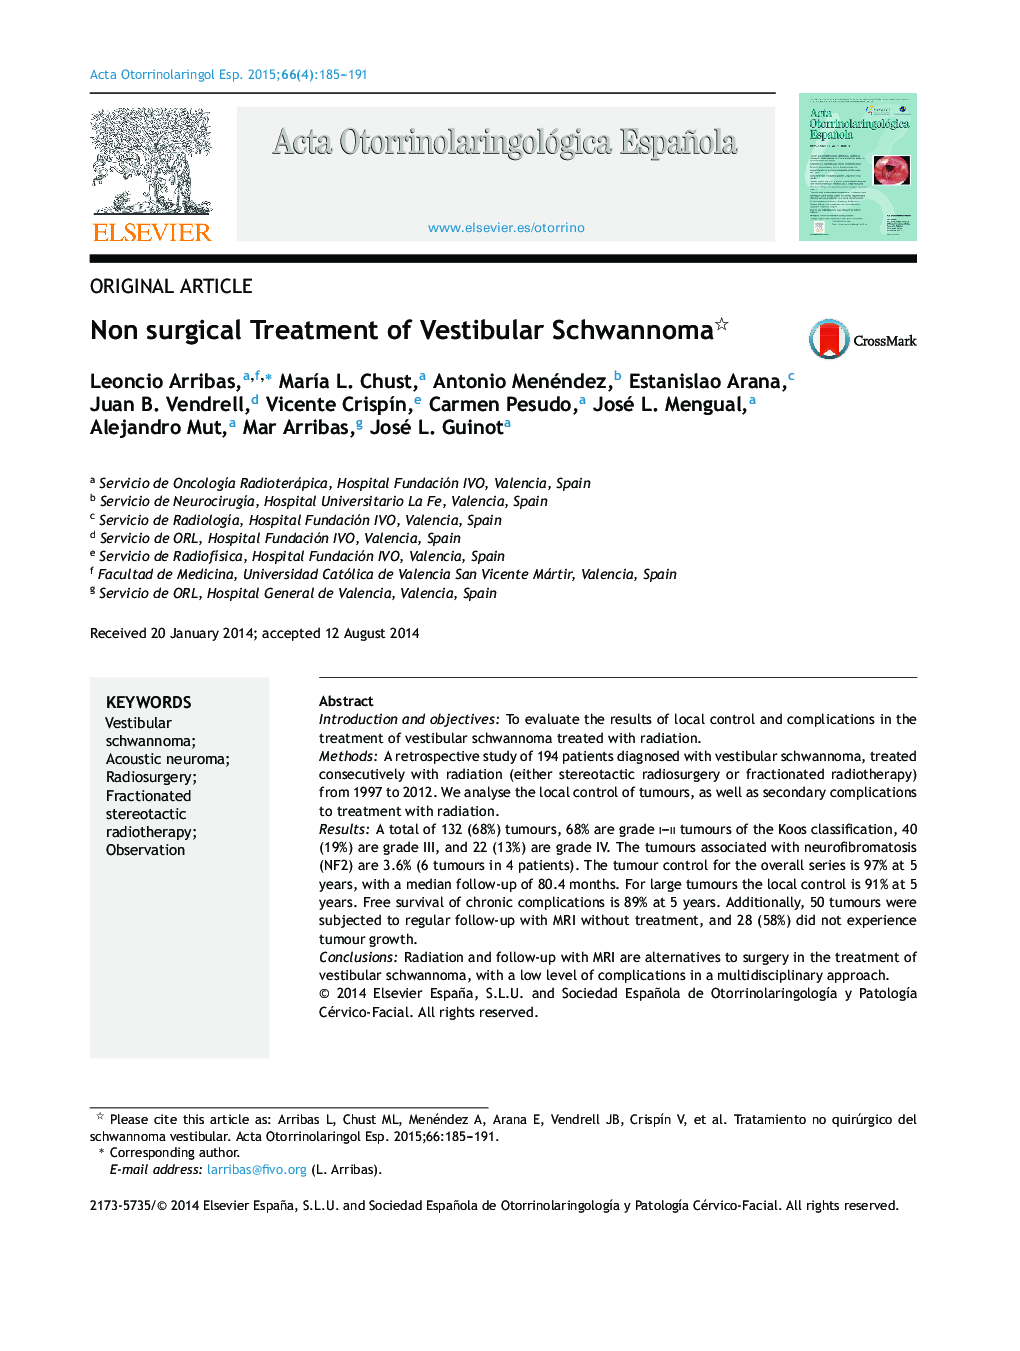 Non surgical Treatment of Vestibular Schwannoma 